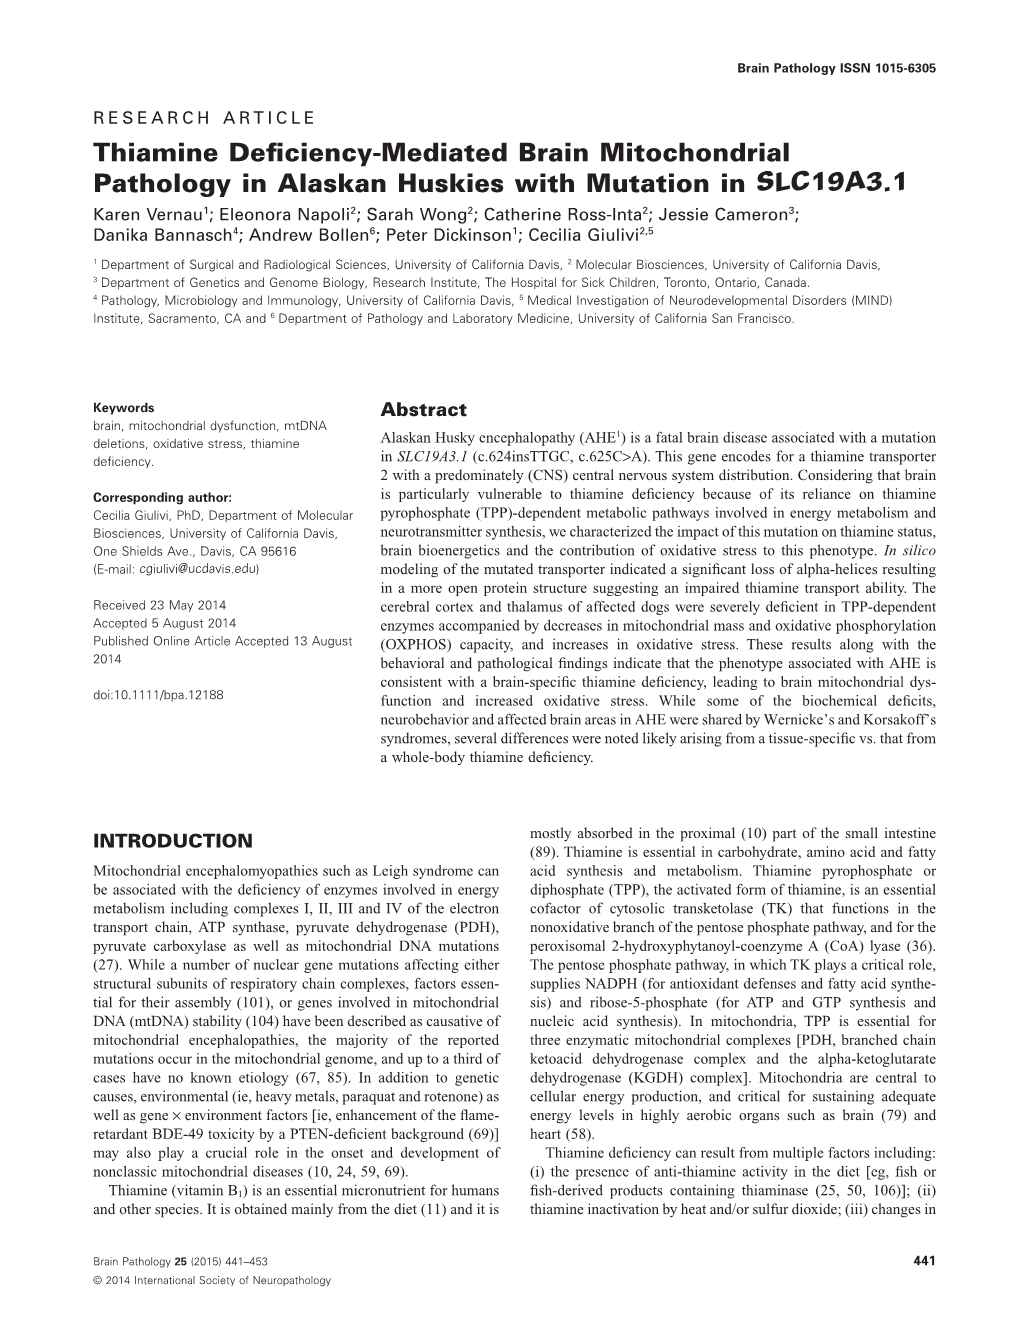 Thiamine Deficiency-Mediated Brain Mitochondrial Pathology in Alaskan